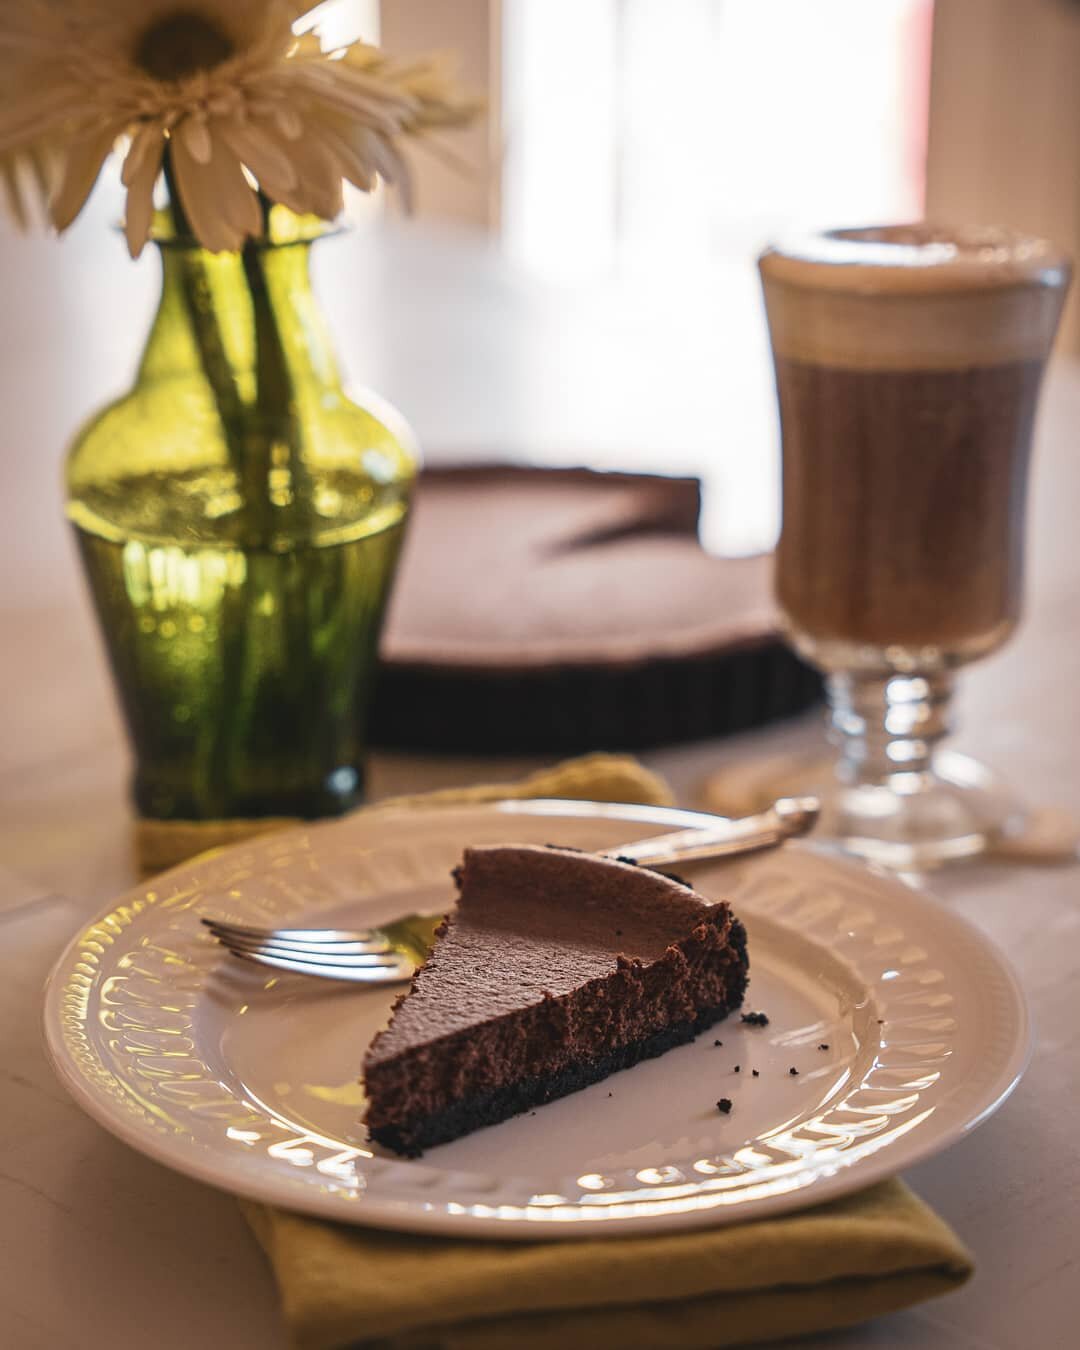 Perhaps a Chocolate Whiskey Tart for St. Patrick's Day? ☘️

Recipe at saltonionmoon.com
📷: @james_culcasi 

#sl&aacute;inte #irishwhiskey #stpatricksday #chocolate #memory #luckoftheirish☘️ #anamcara